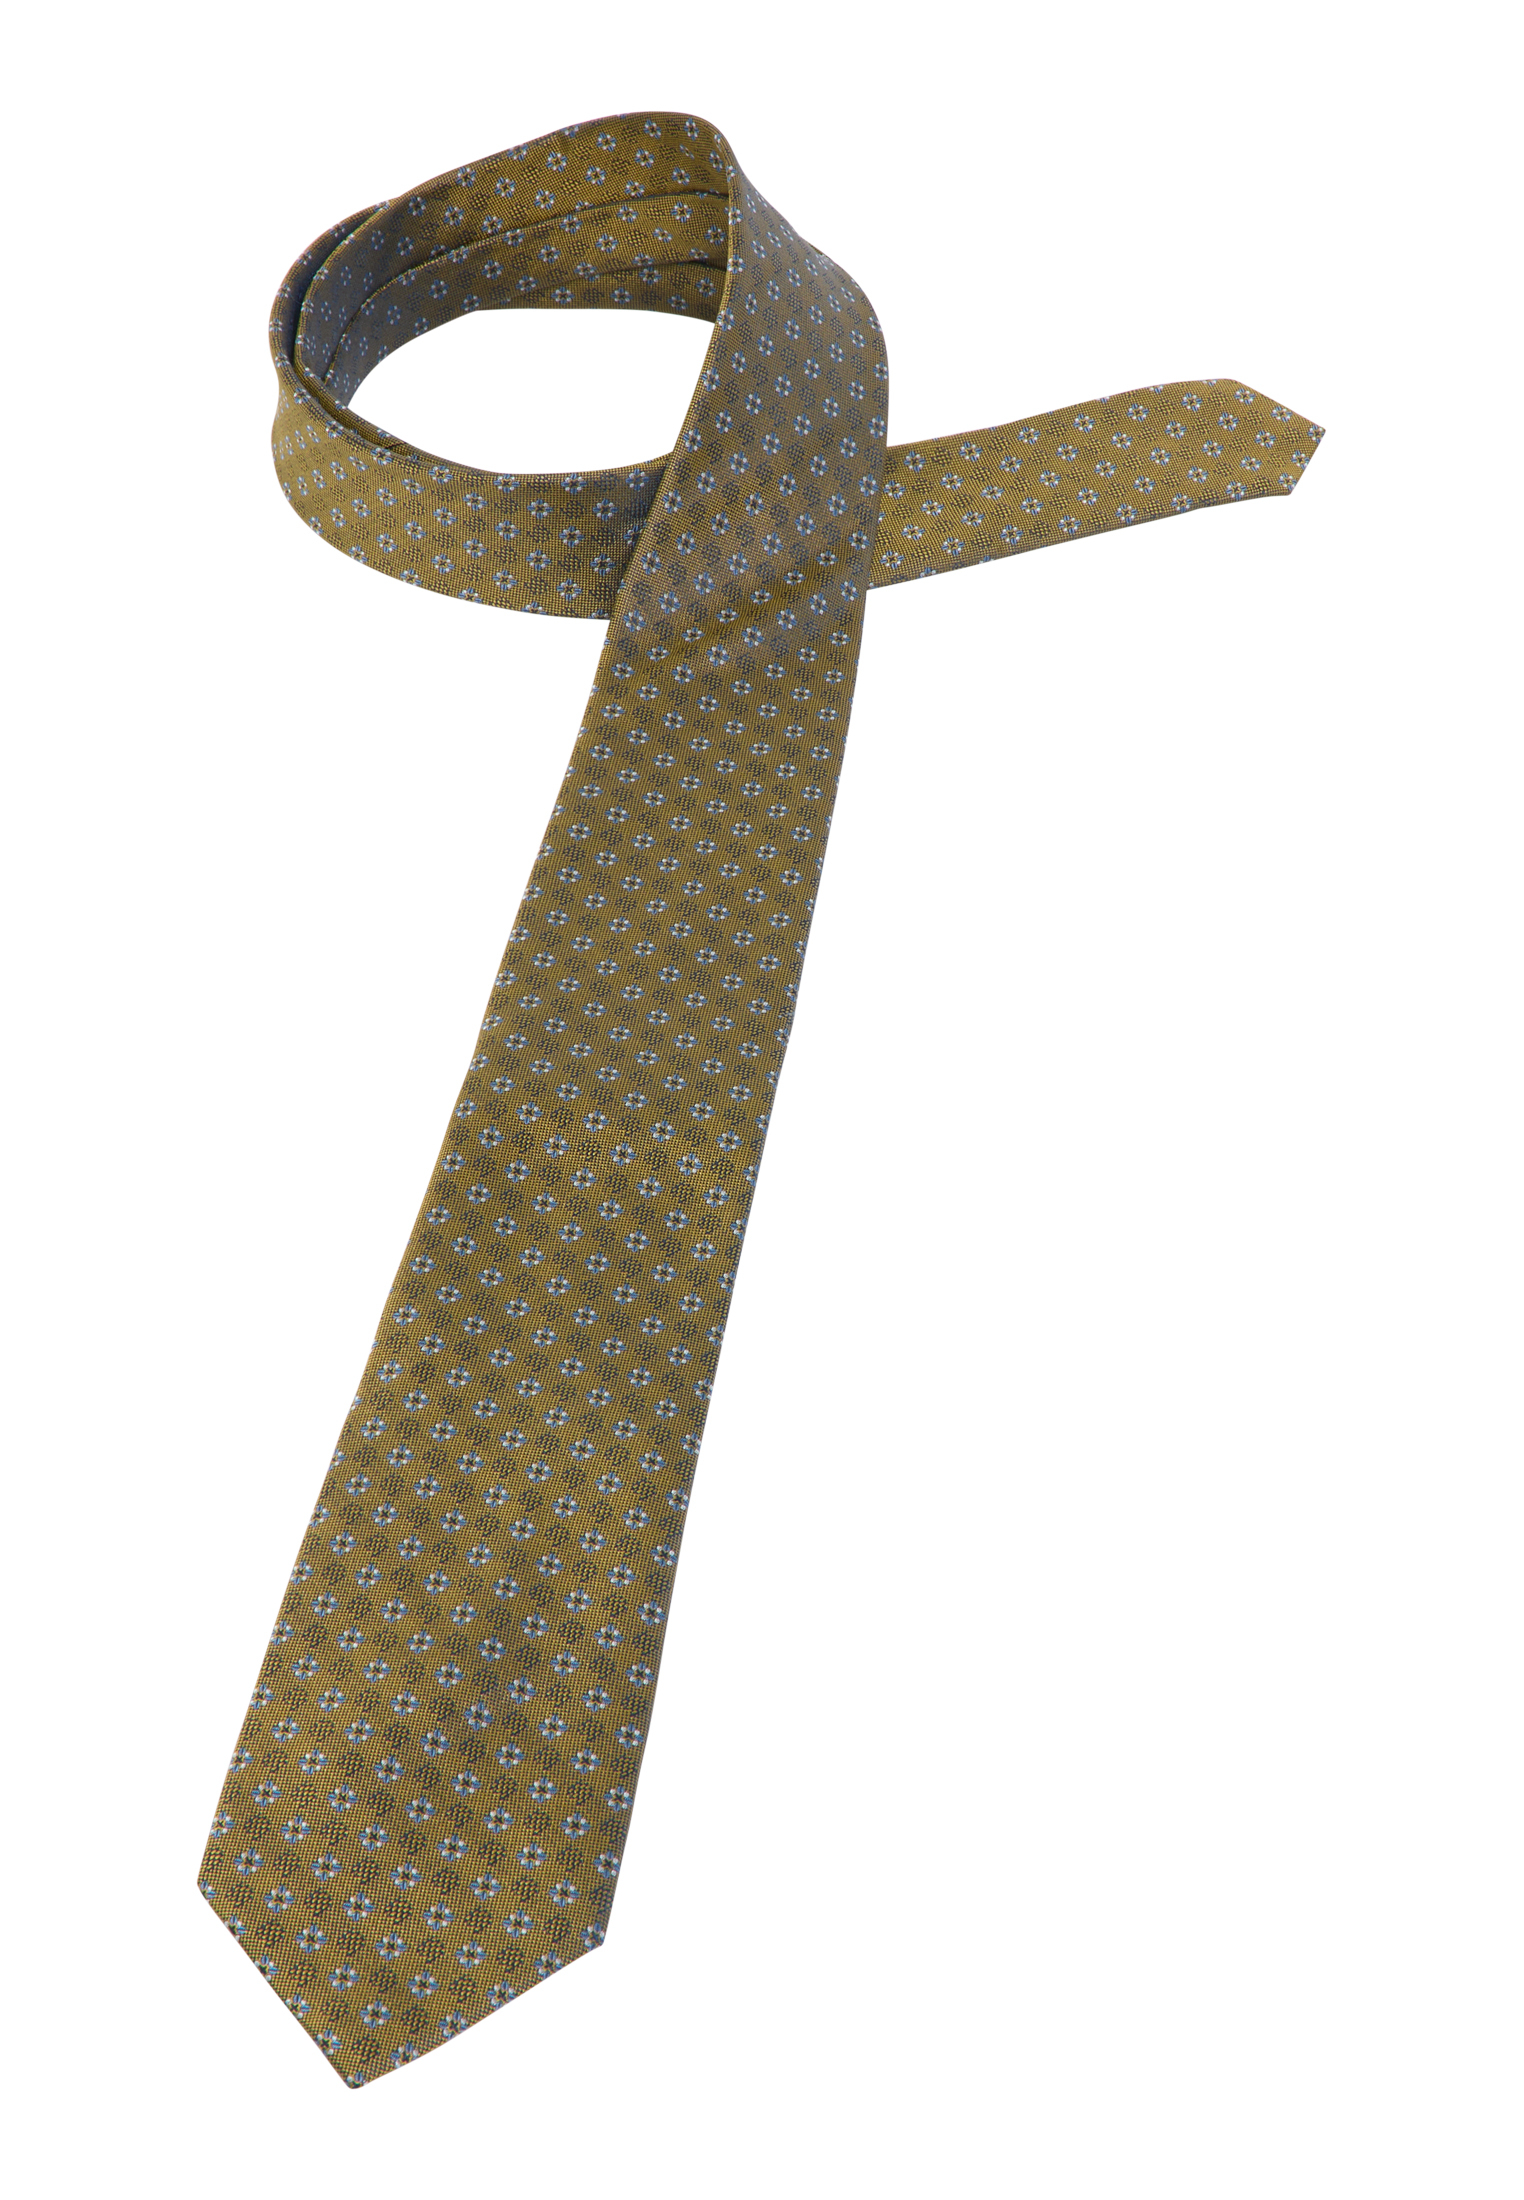 Krawatte in ocker 1AC01899-07-34-142 ocker | 142 gemustert | 